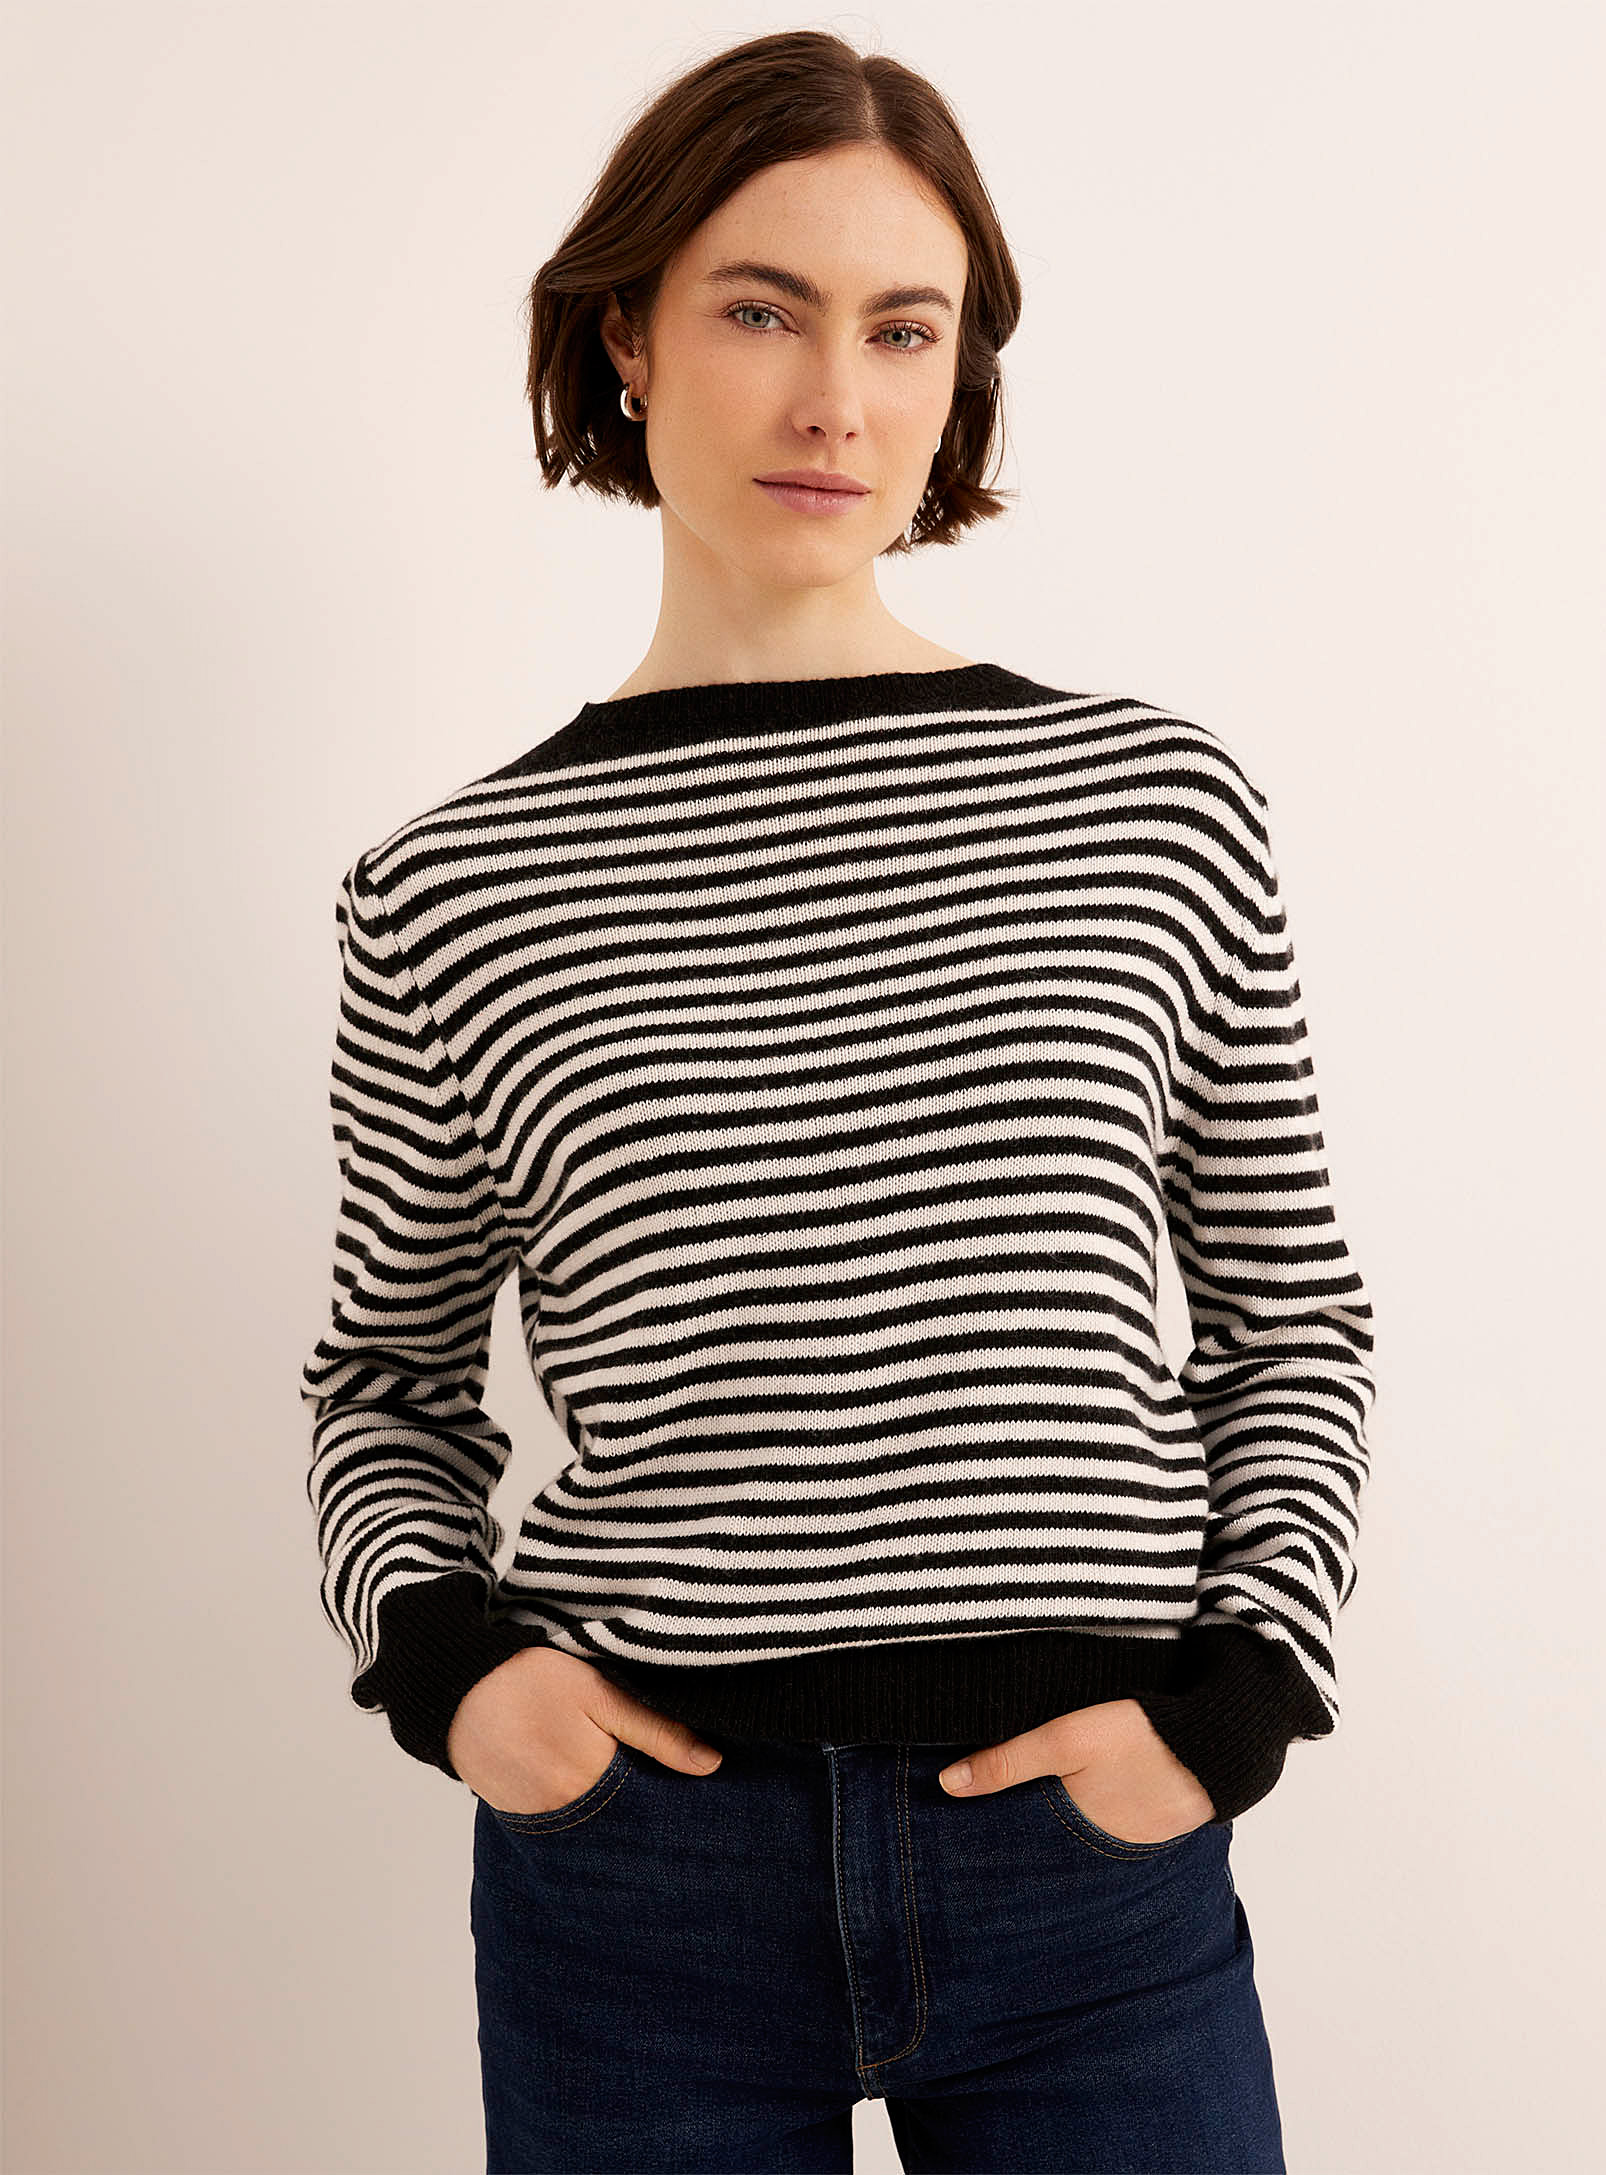 Contemporaine - Women's Touch of cashmere striped sweater